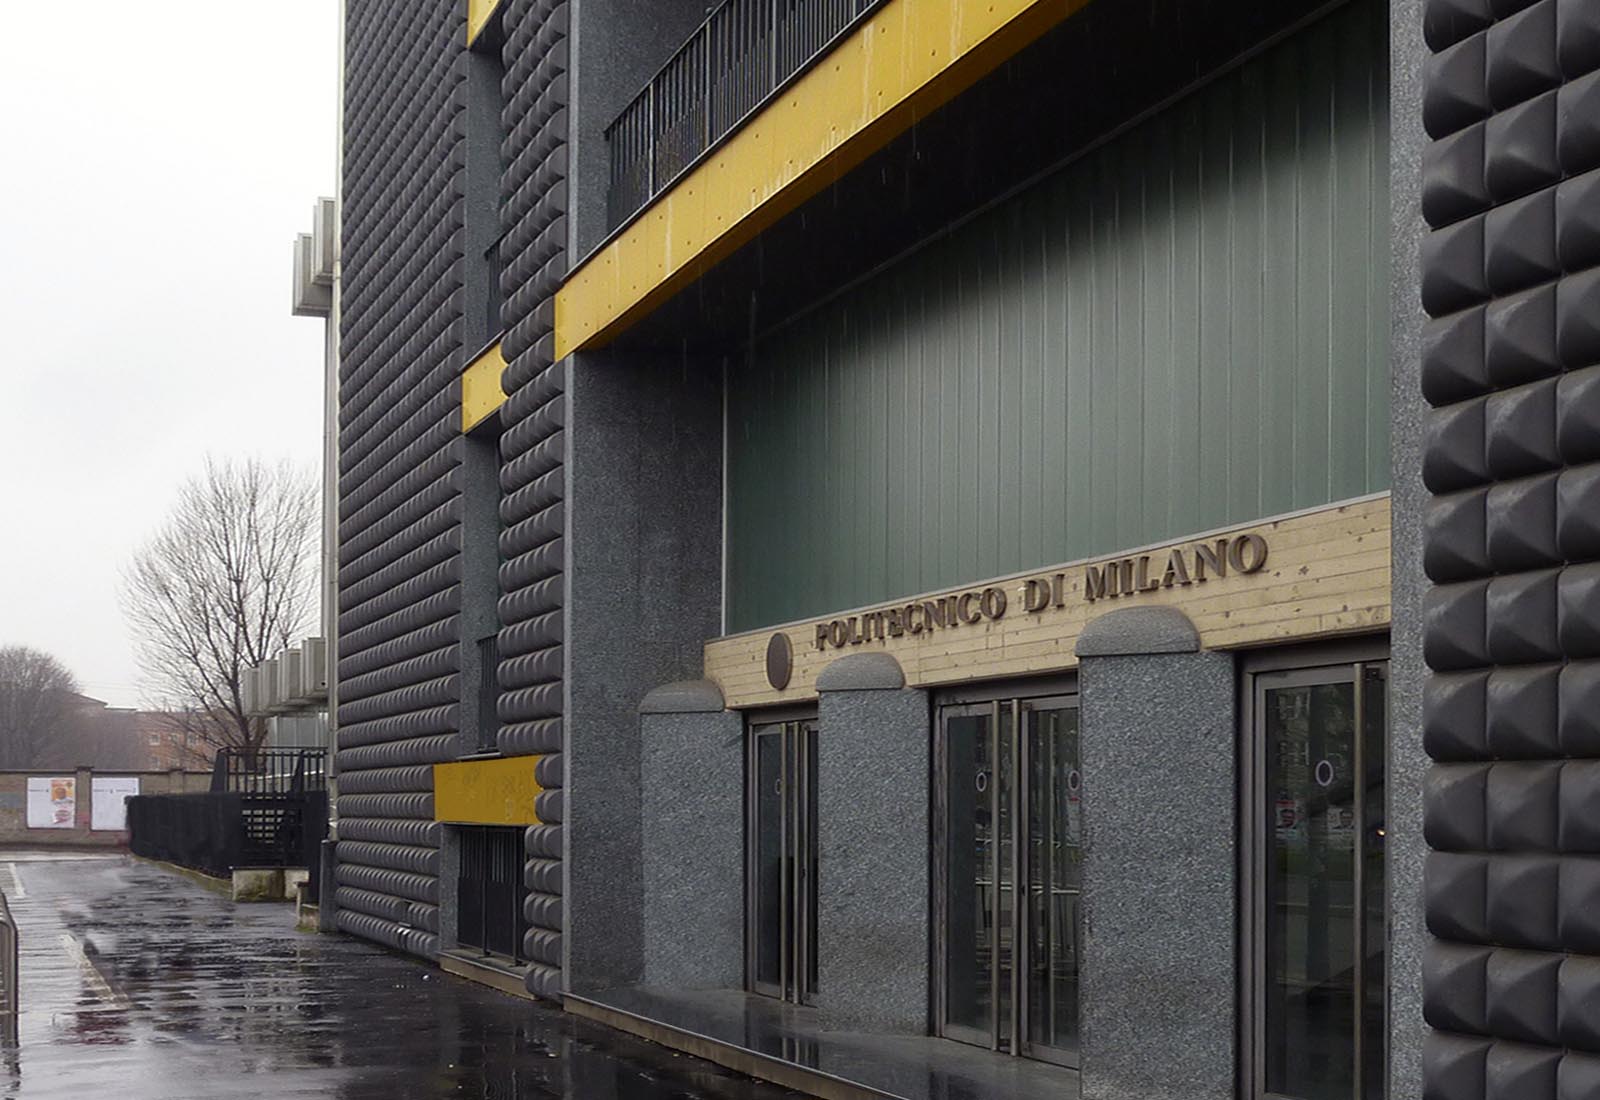 Building 25 Politecnico di Milano - Entrance to the building